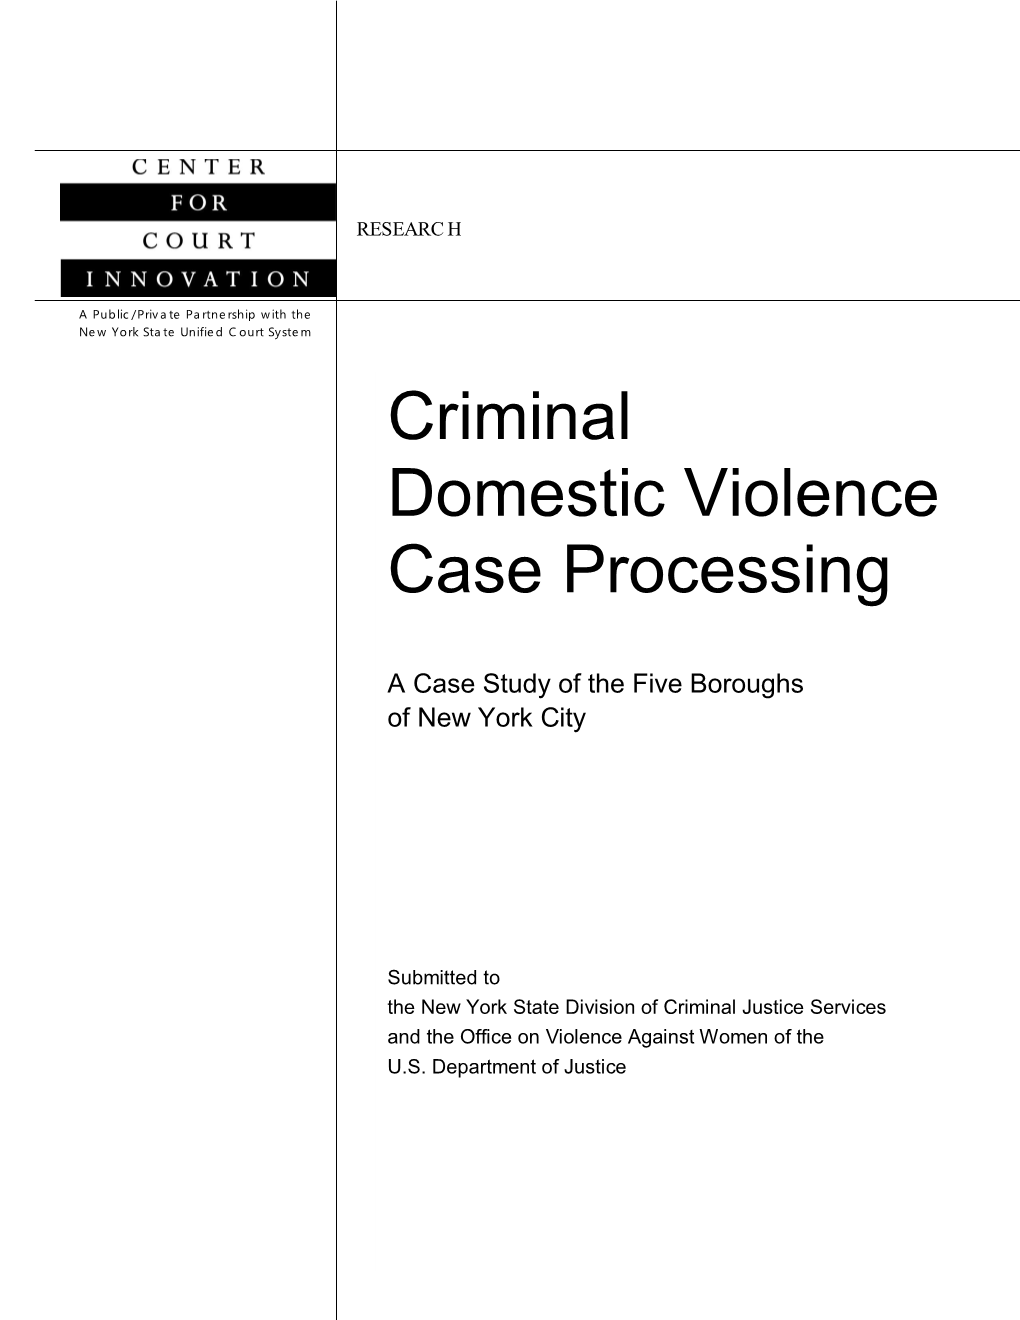 Criminal Domestic Violence Case Processing